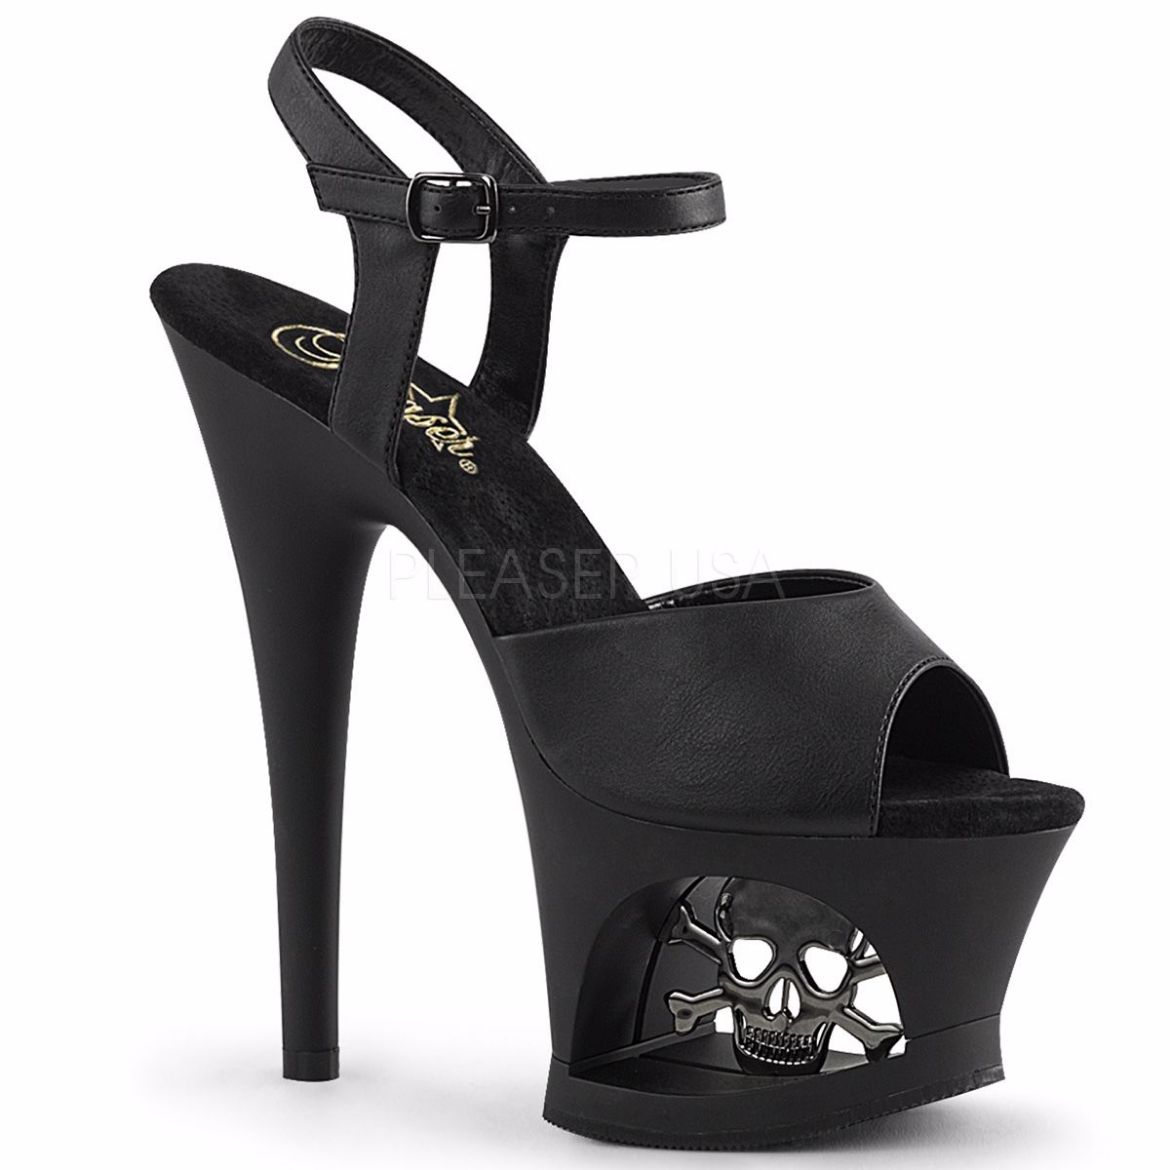 Product image of Pleaser Moon-709Sk Black Faux Leather/Black Matte, 7 inch (17.8 cm) Heel, 2 3/4 inch (7 cm) Platform Sandal Shoes